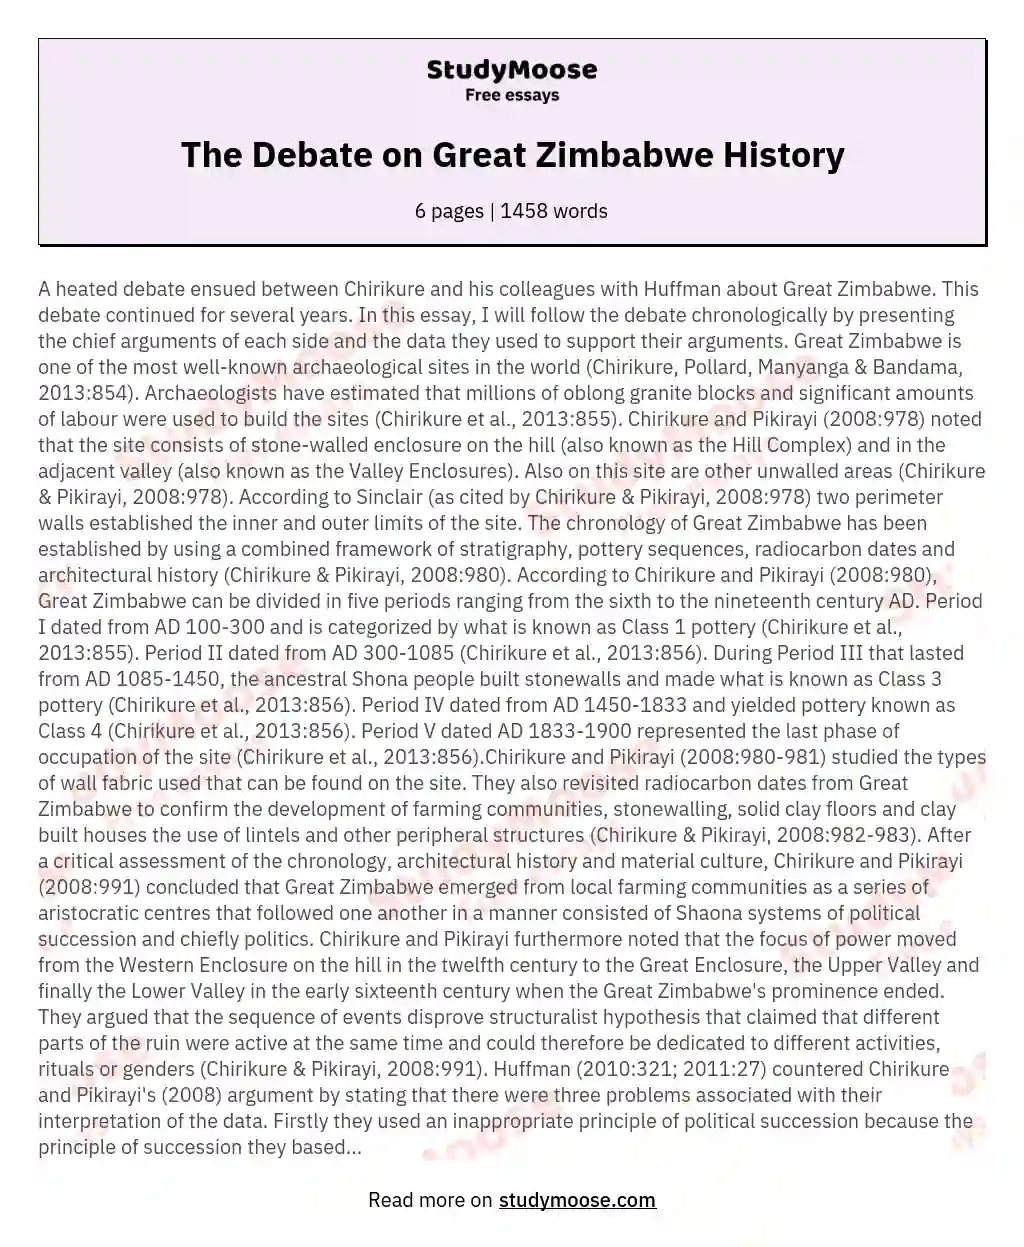 The Debate on Great Zimbabwe History essay